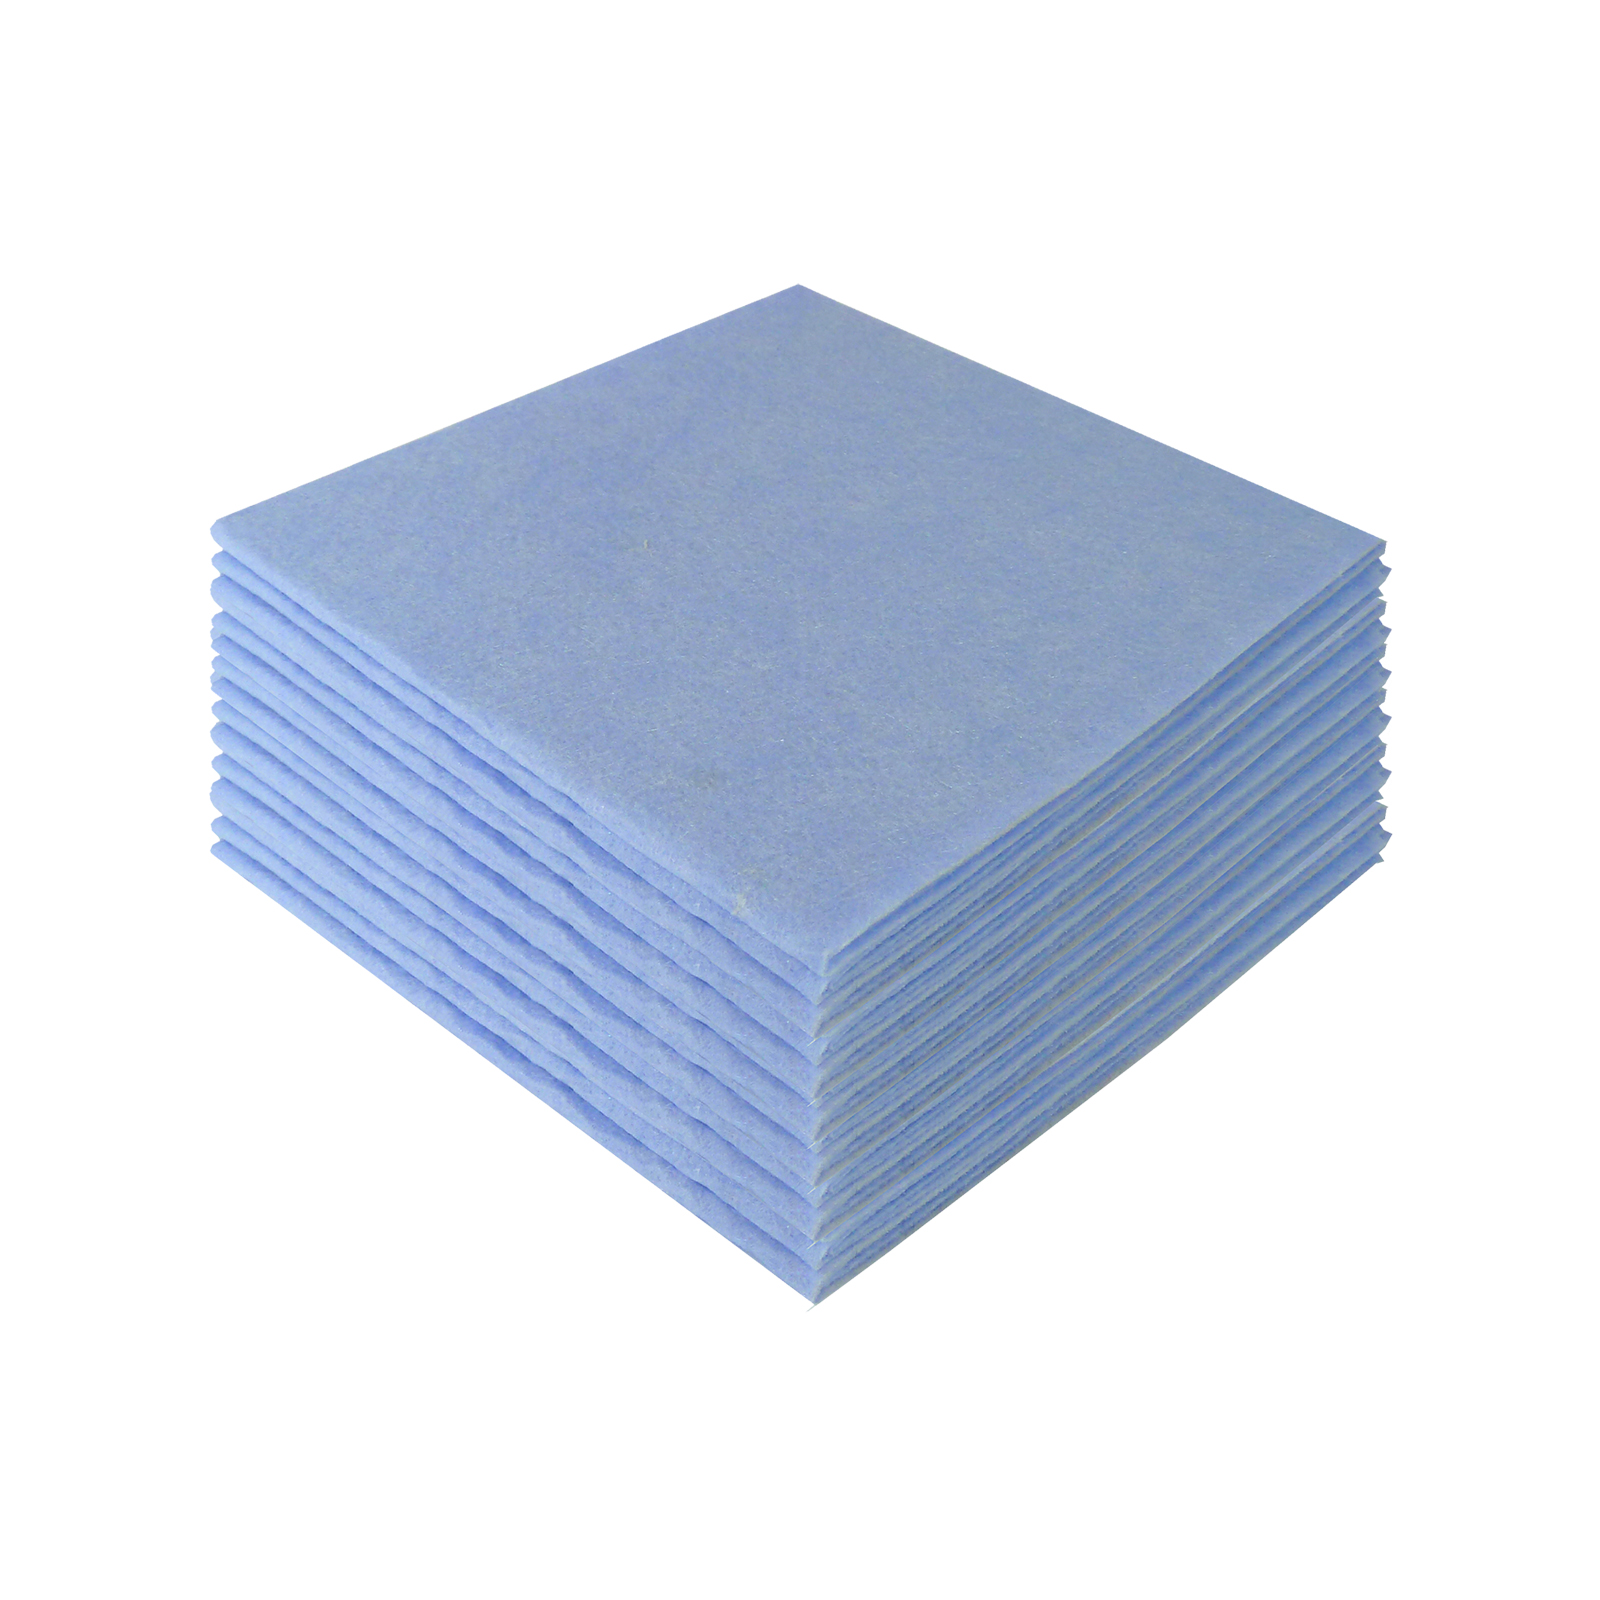 Panni "Multisoft" blu 40x36cm - confezione da 10 pezzi | Briantina Professional